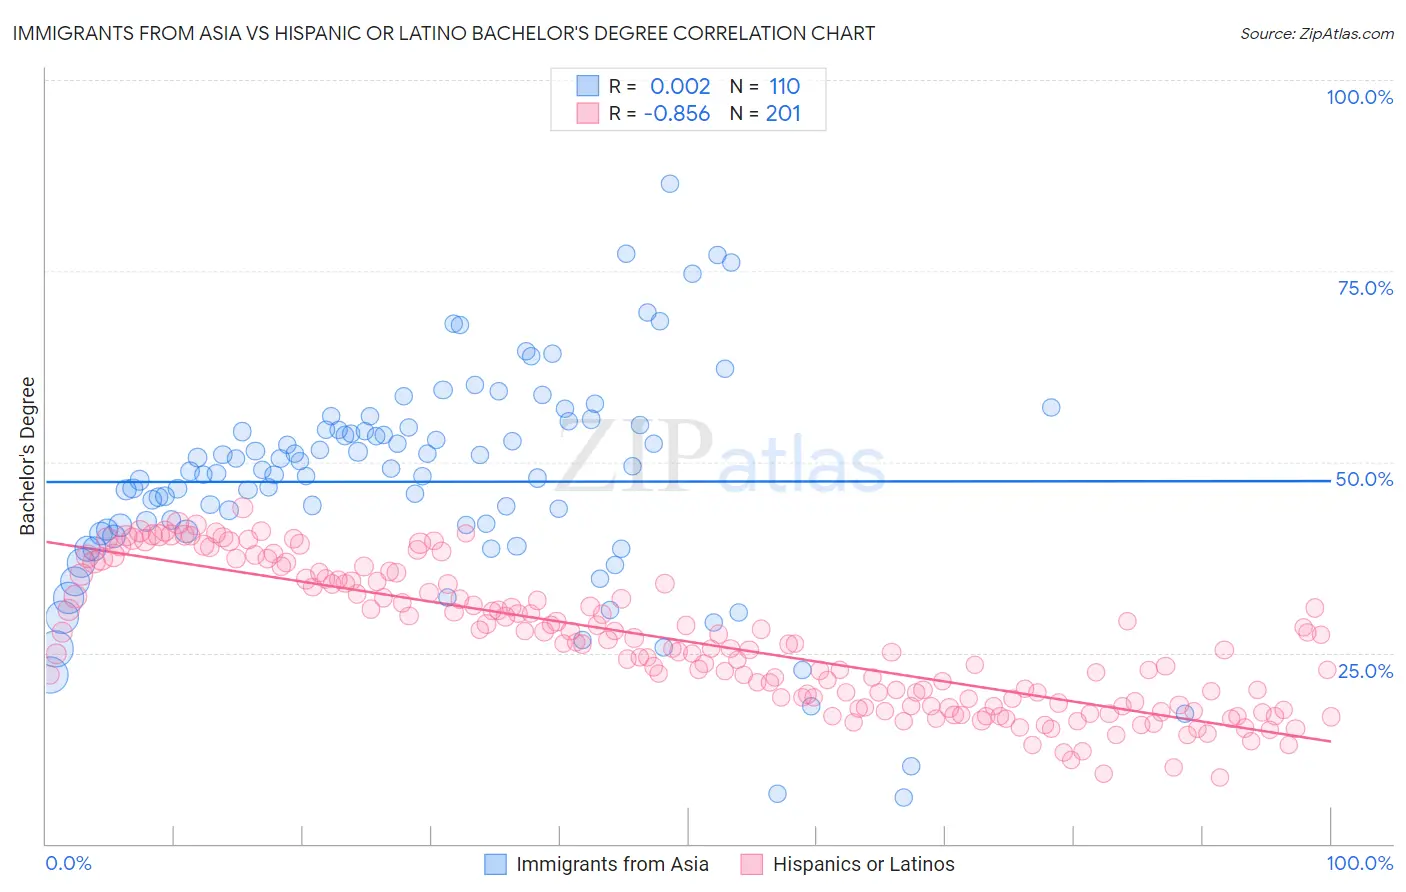 Immigrants from Asia vs Hispanic or Latino Bachelor's Degree